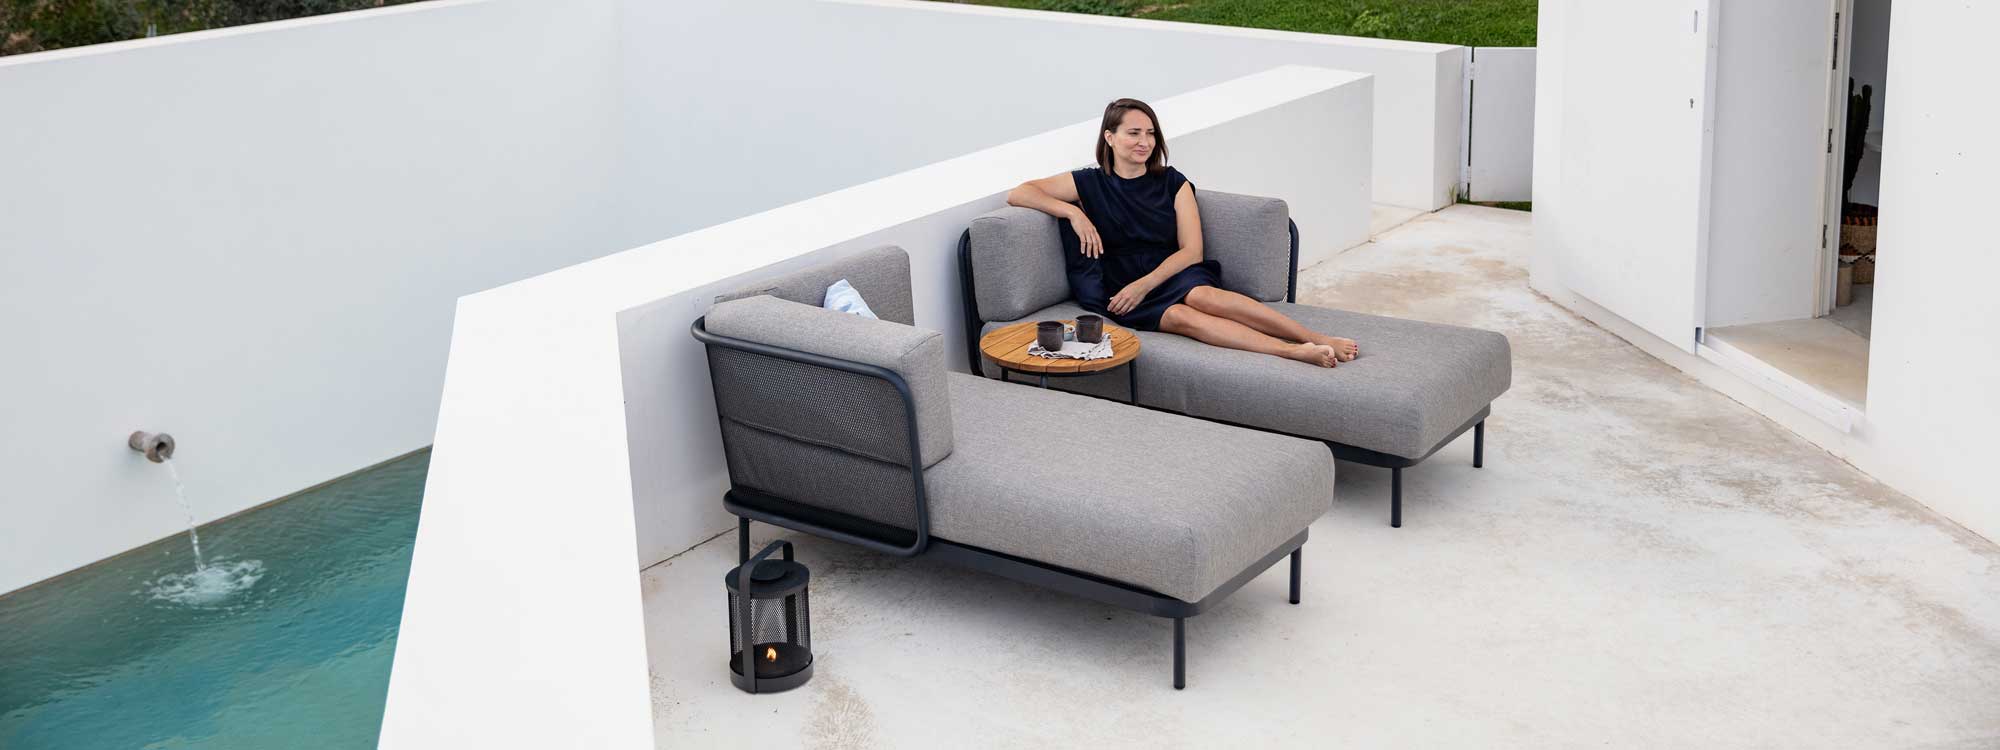 Baza modular garden sofa is a modern outdoor lounge set in high quality garden furniture materials by Todus stainless steel garden furniture